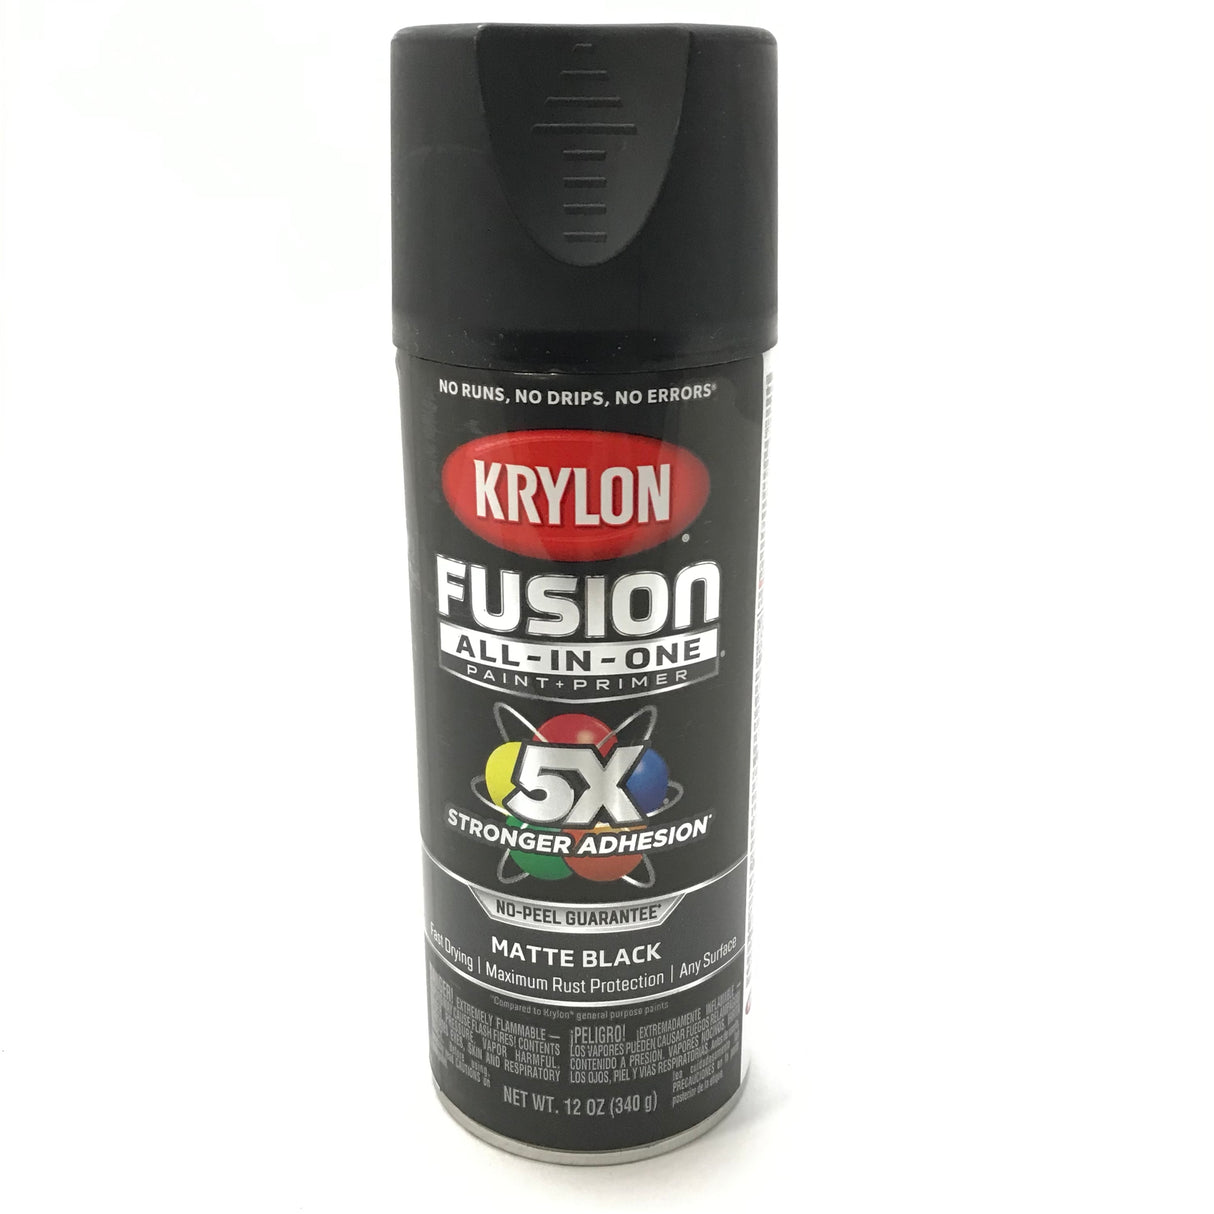 KRYLON 2754 MATTE BLACK All-In-One Fusion Paint & Primer - No-Peel